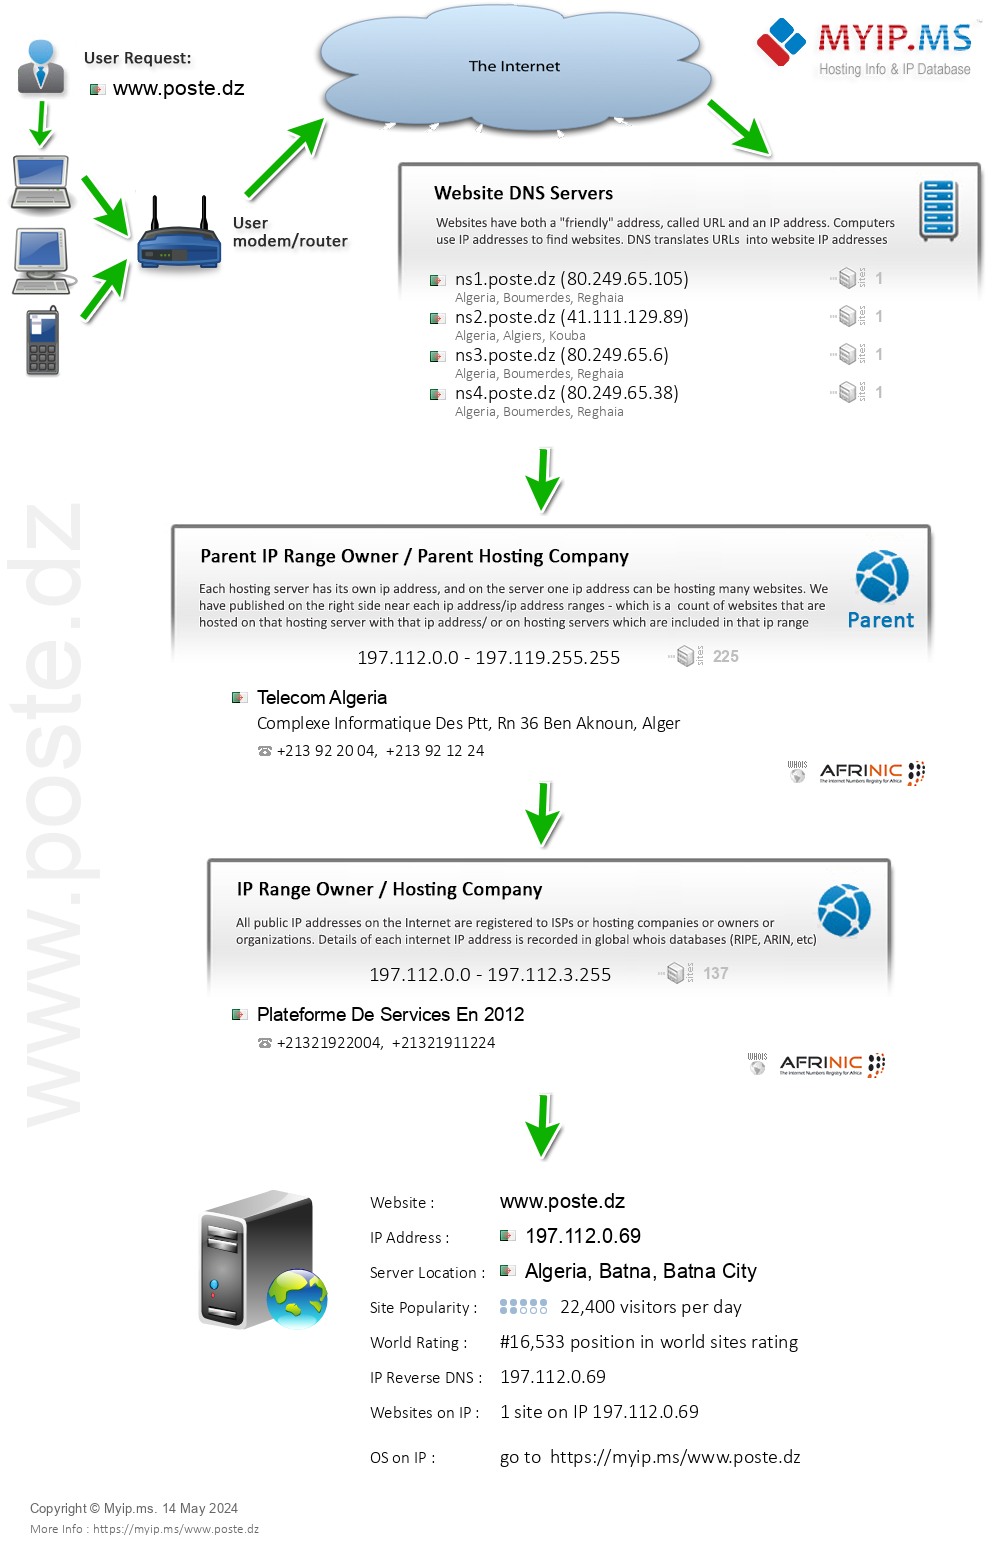 Poste.dz - Website Hosting Visual IP Diagram